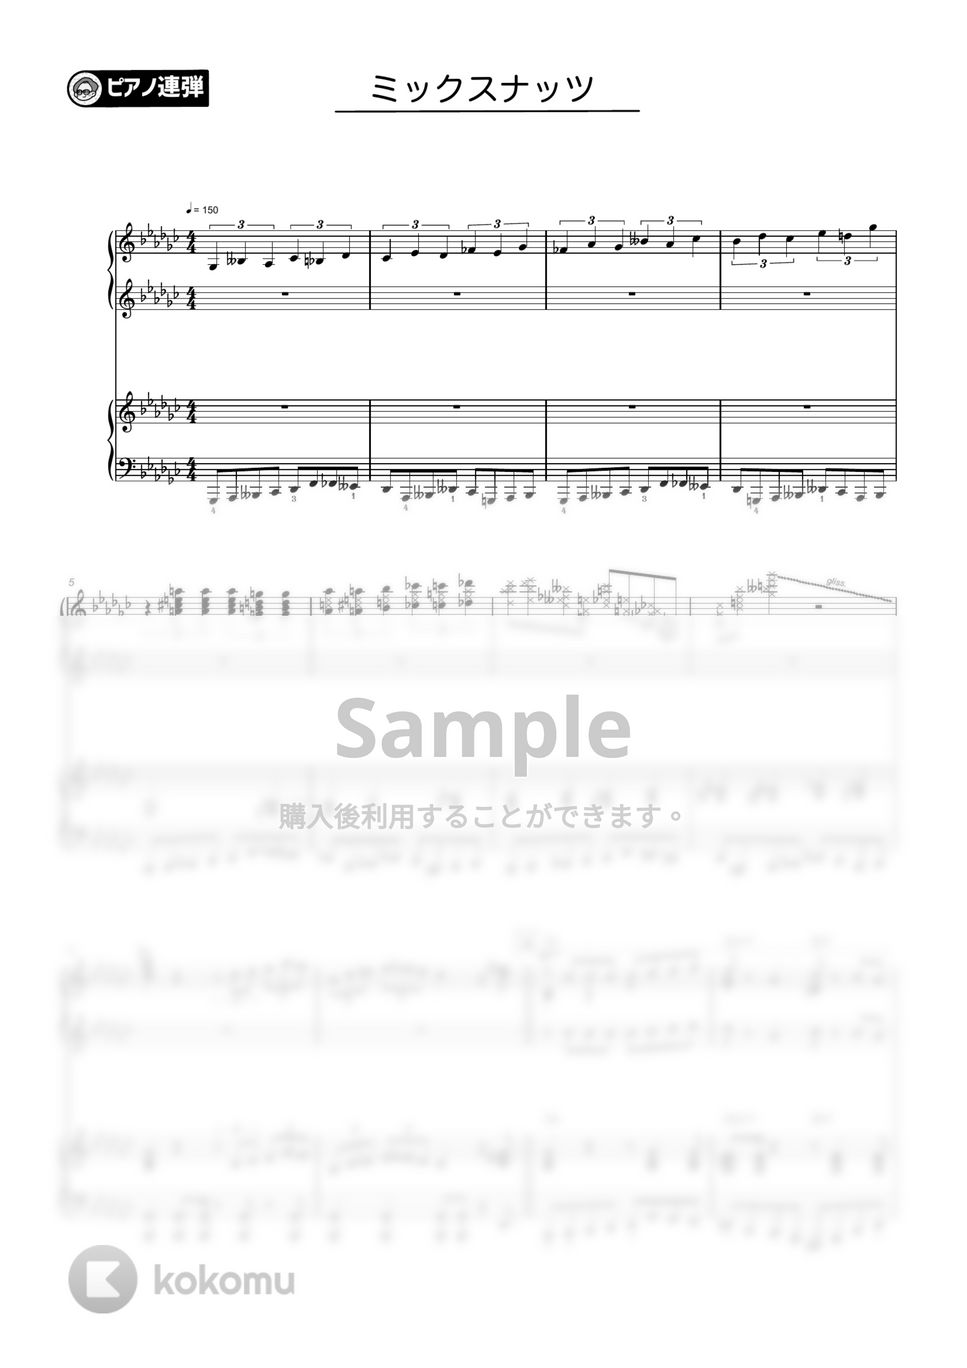 Official髭男dism - ミックスナッツ(連弾) by シータピアノ